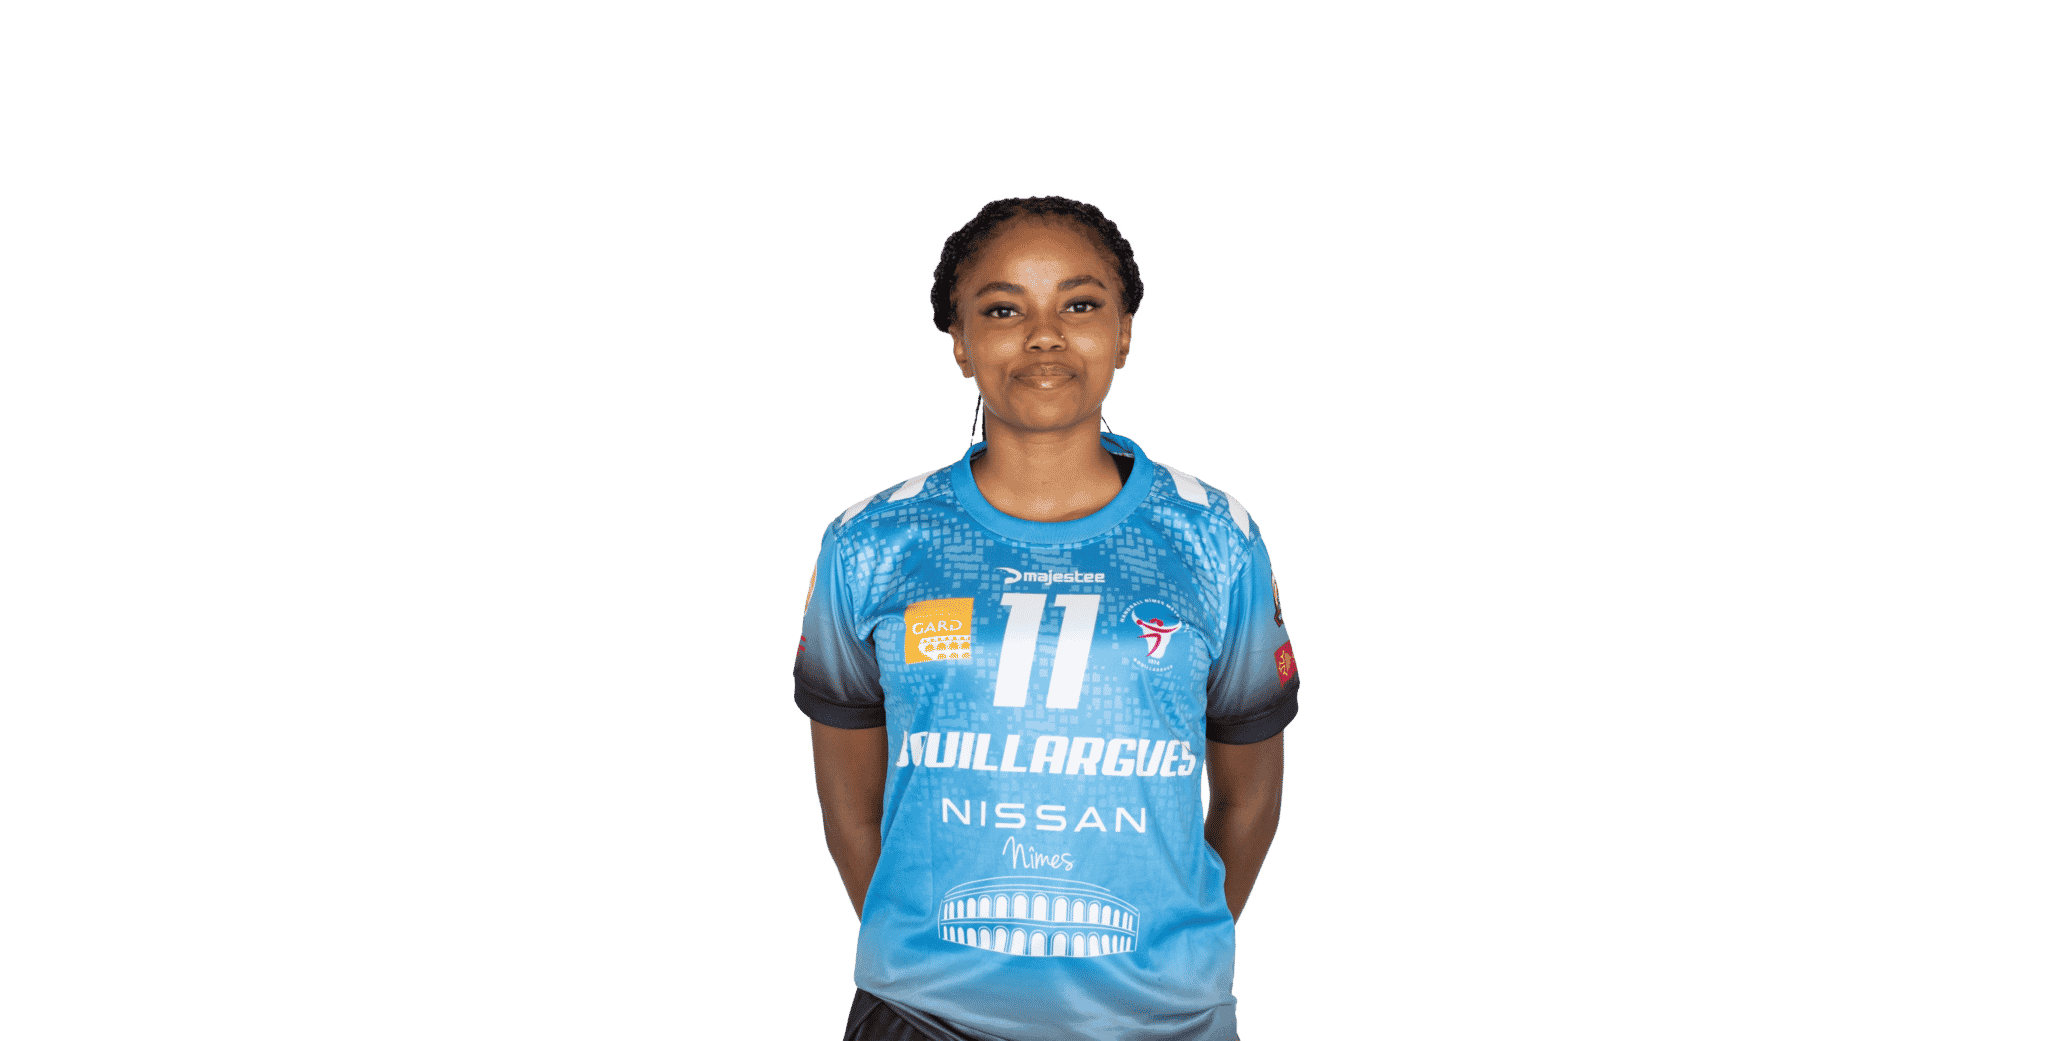 istifada-hassanaly - Ailière gauche division 2 féminine de handball de Bouillargues Handball Nîmes Métropole